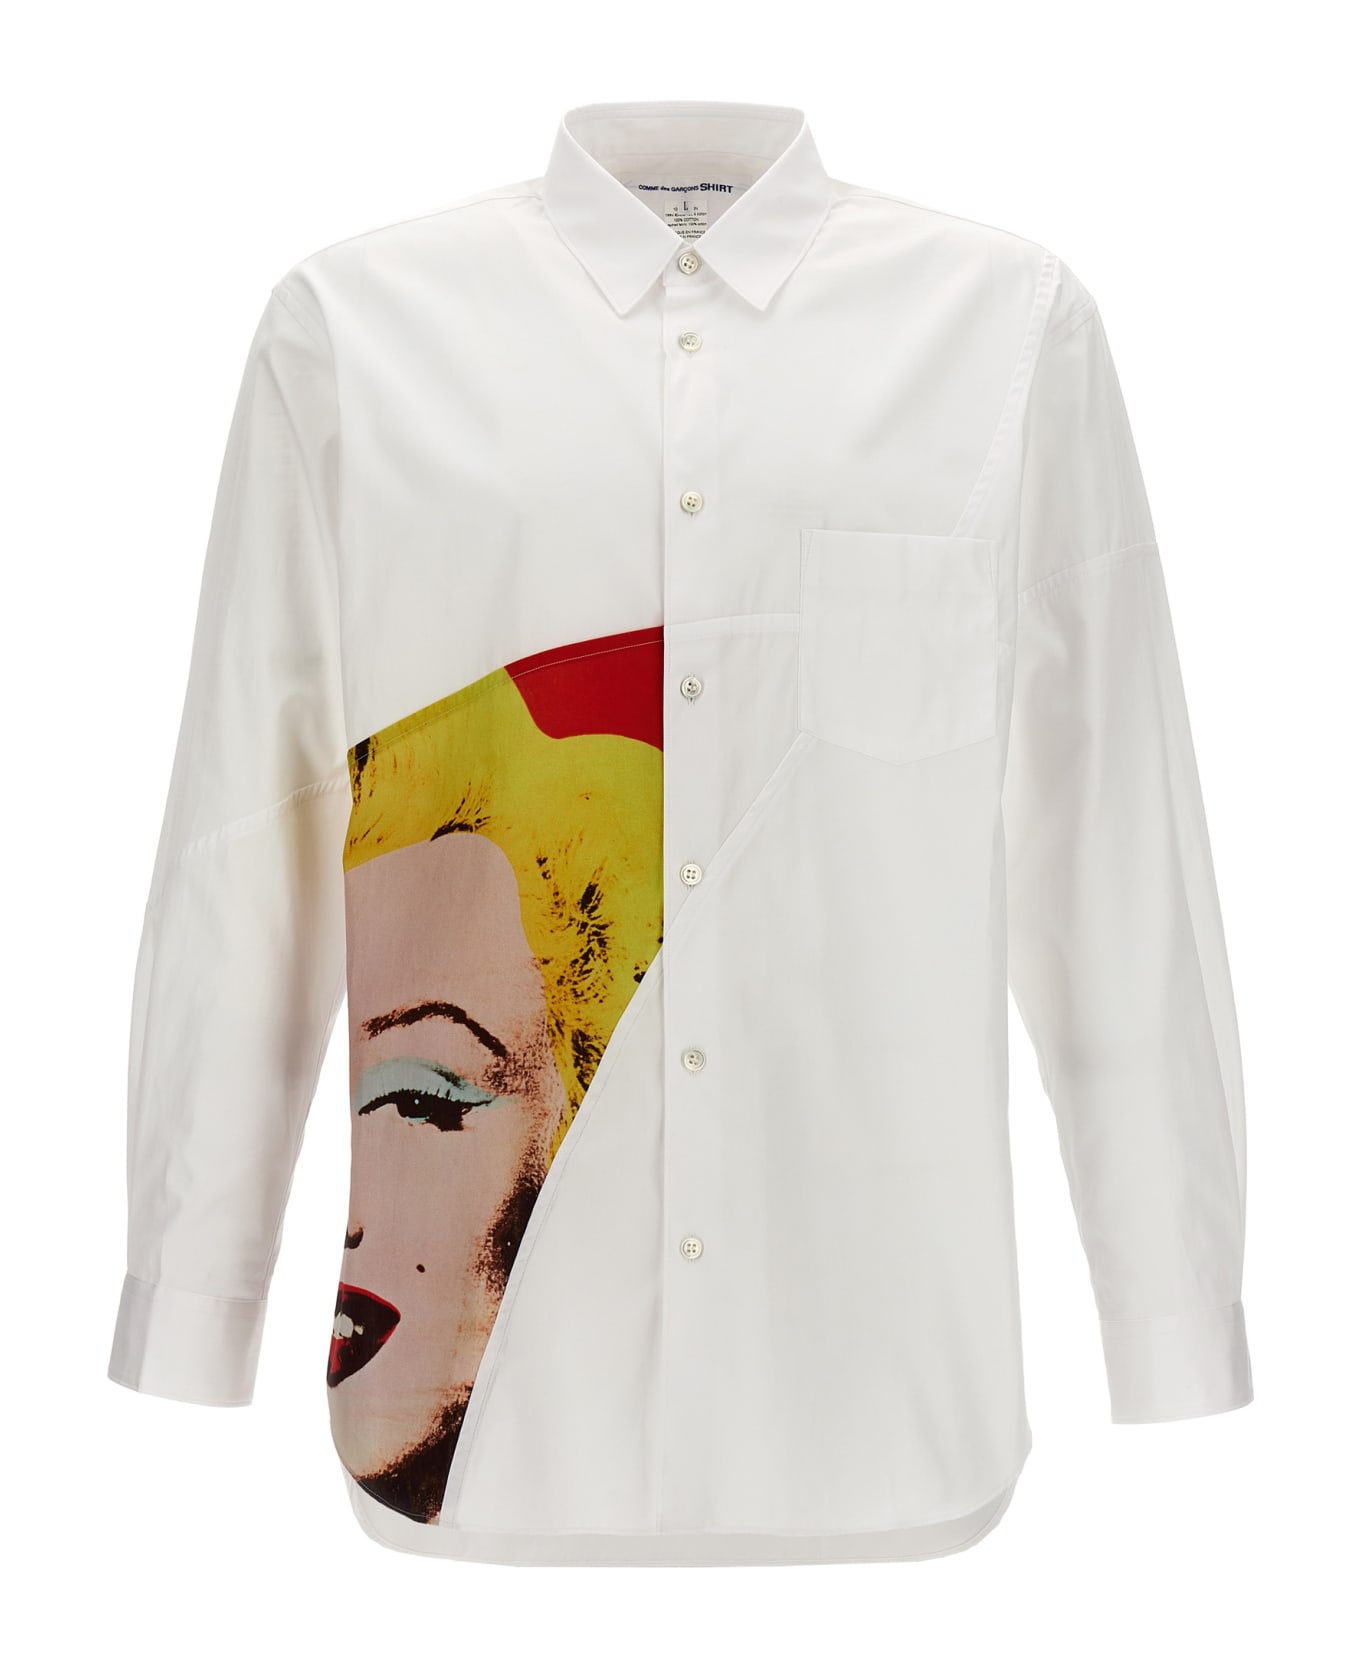 Comme des Garçons Shirt 'andy Warhol' Shirt - White Print